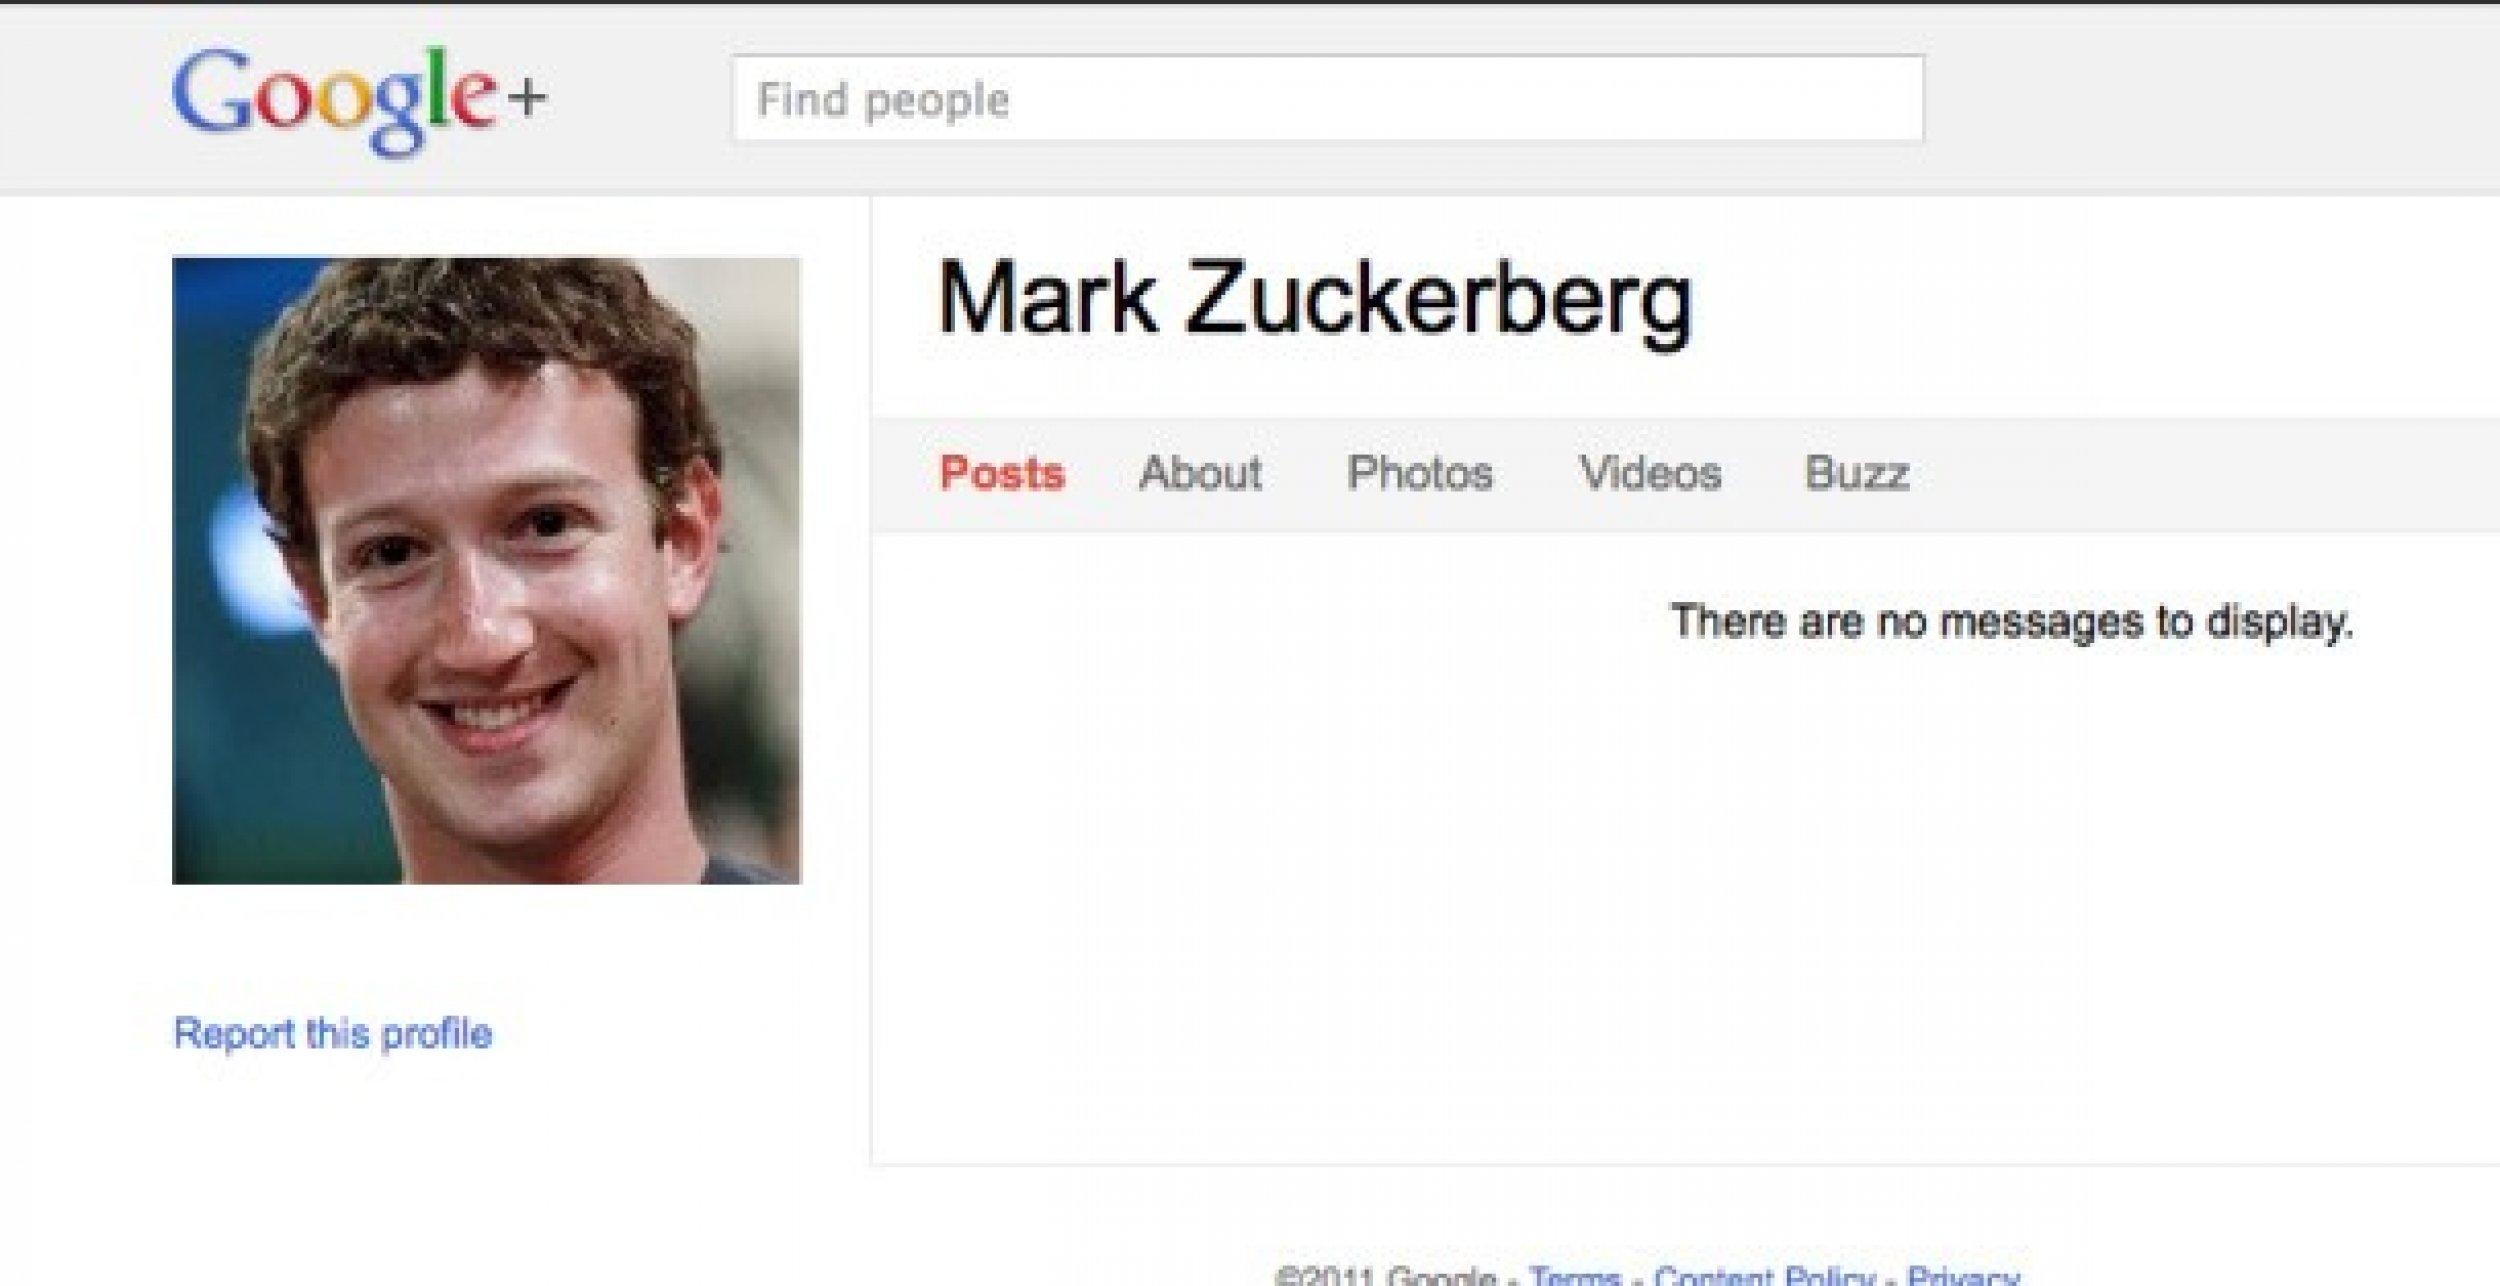 Zuckerberg Returns to the Top of Google Much Happier